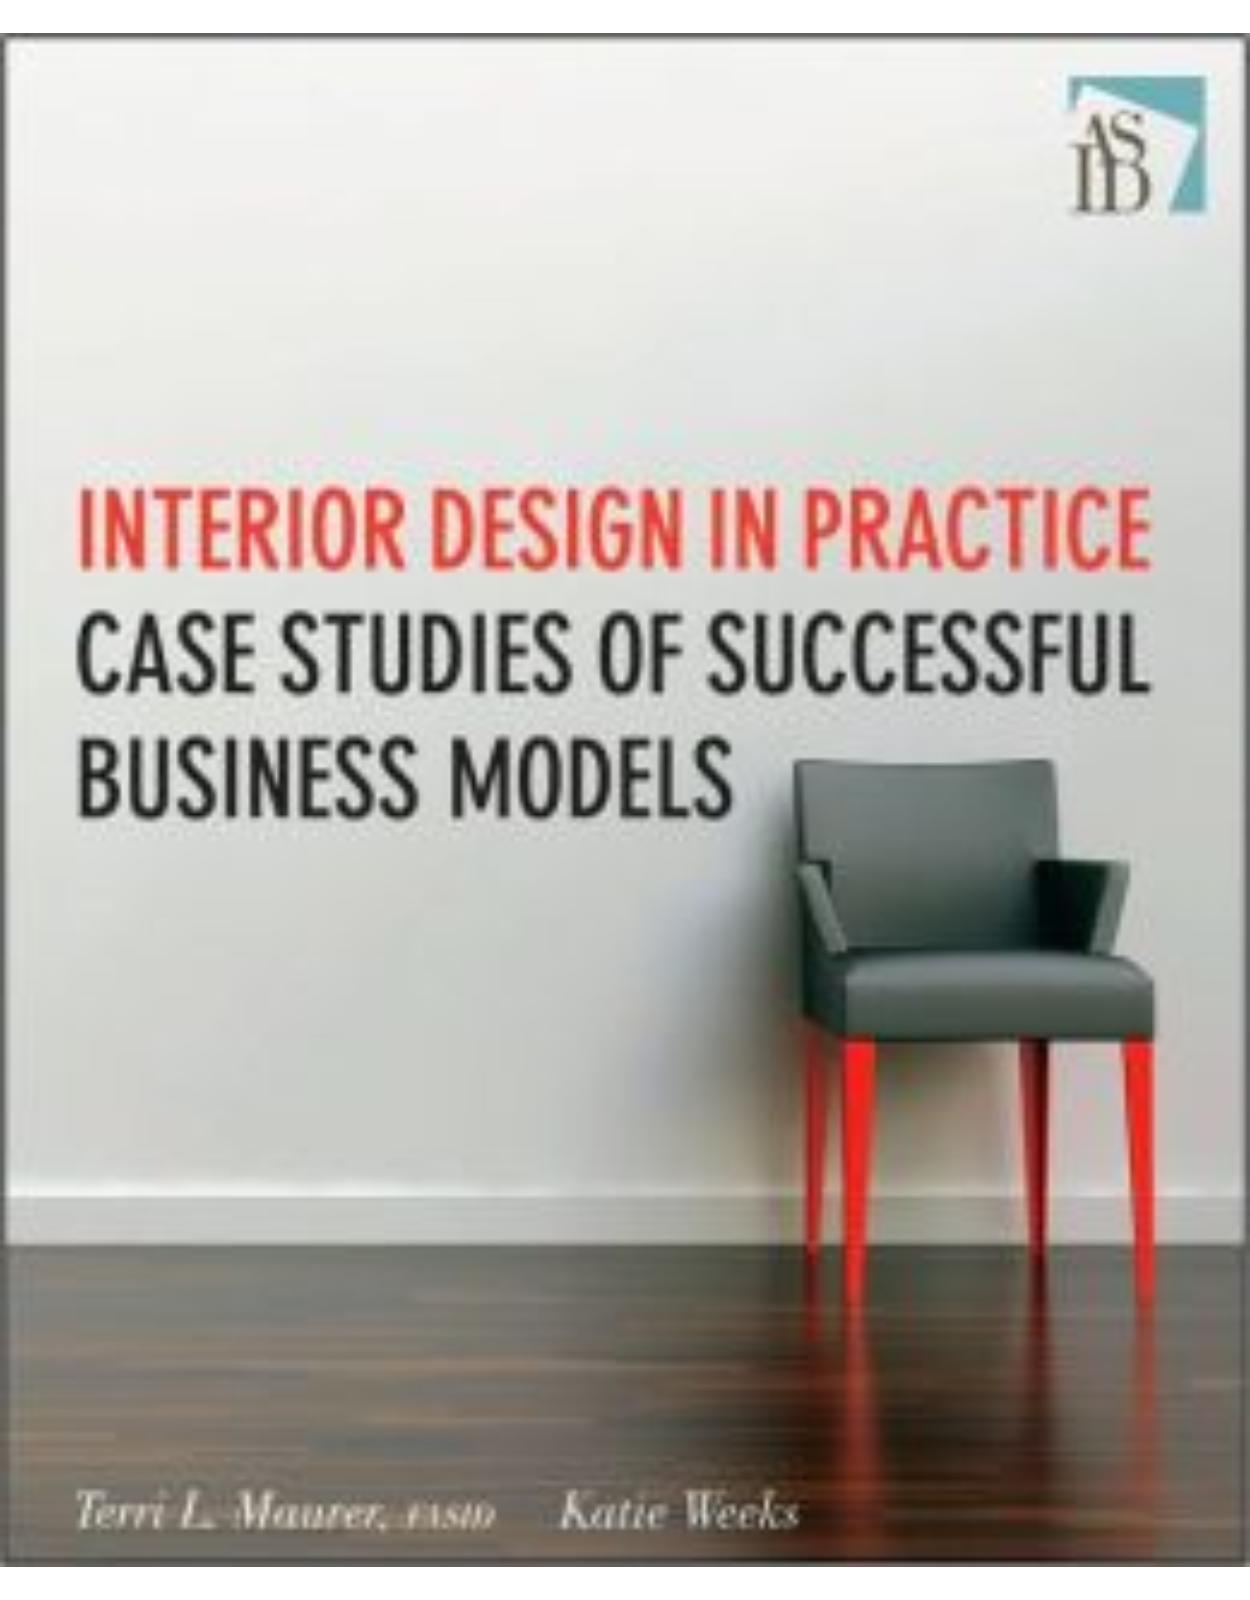 Interior Design in Practice: Case Studies of Successful Business Models